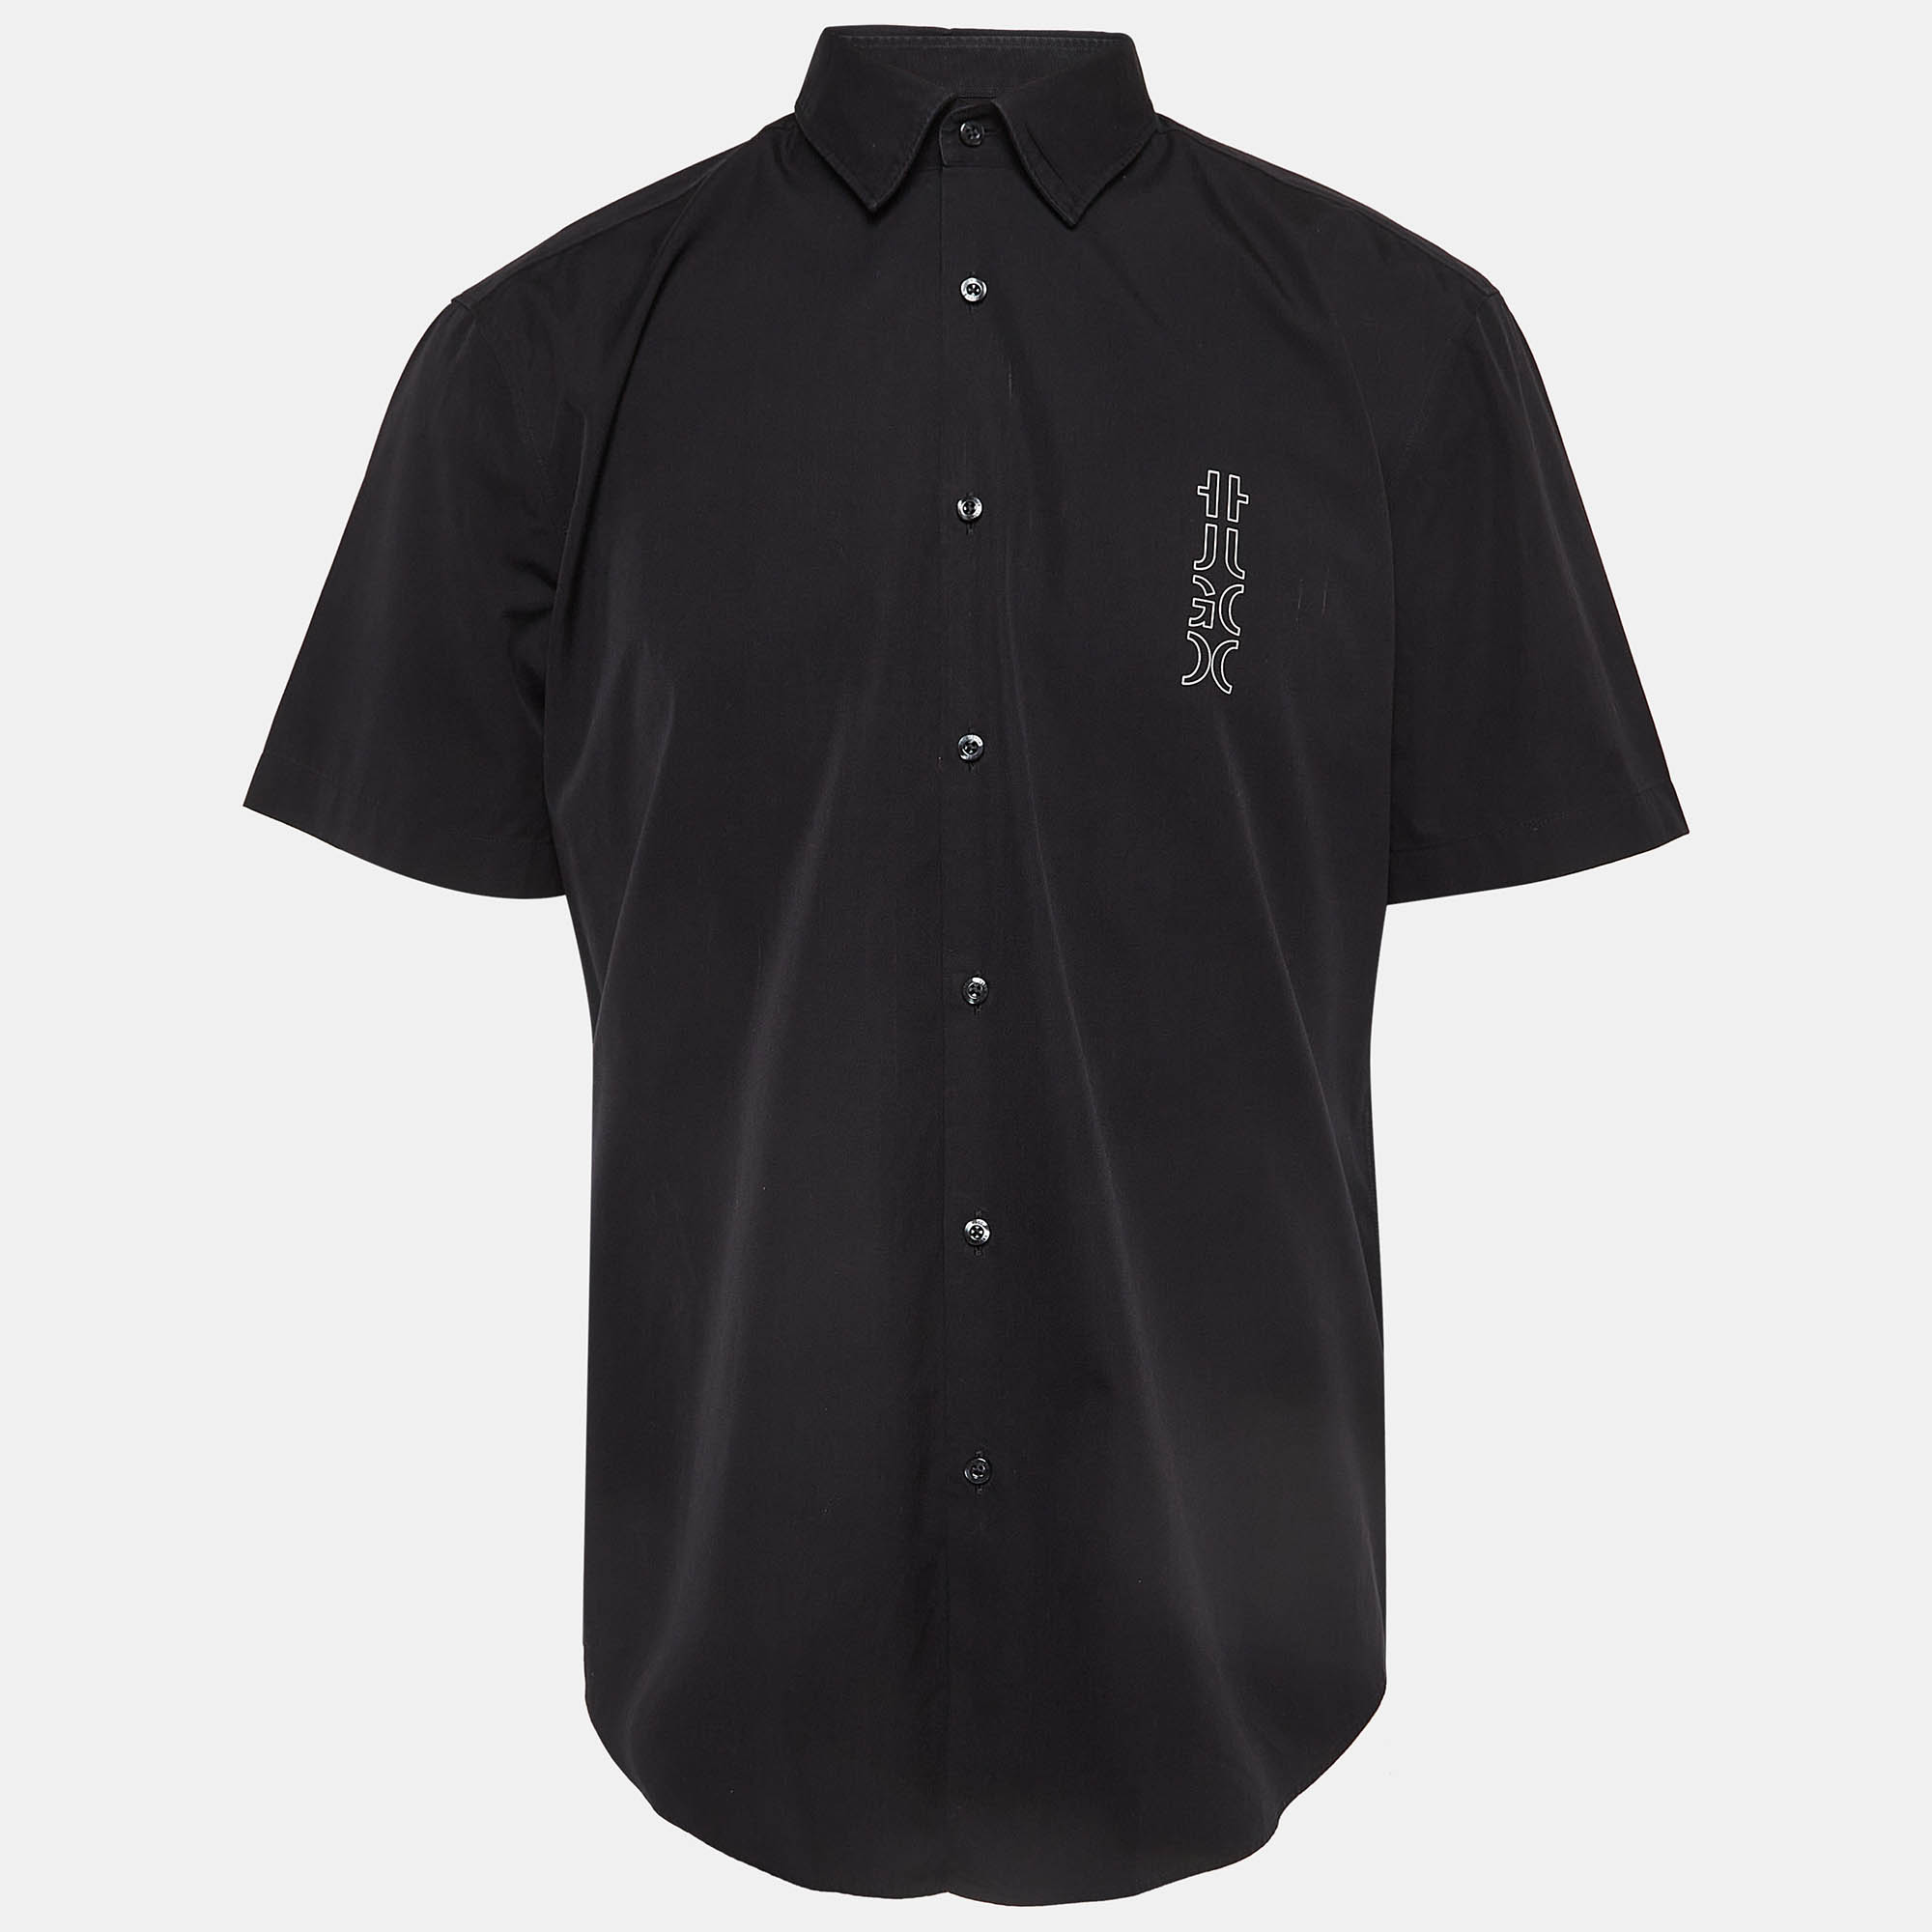 Hugo boss black printed cotton shirt  xxl